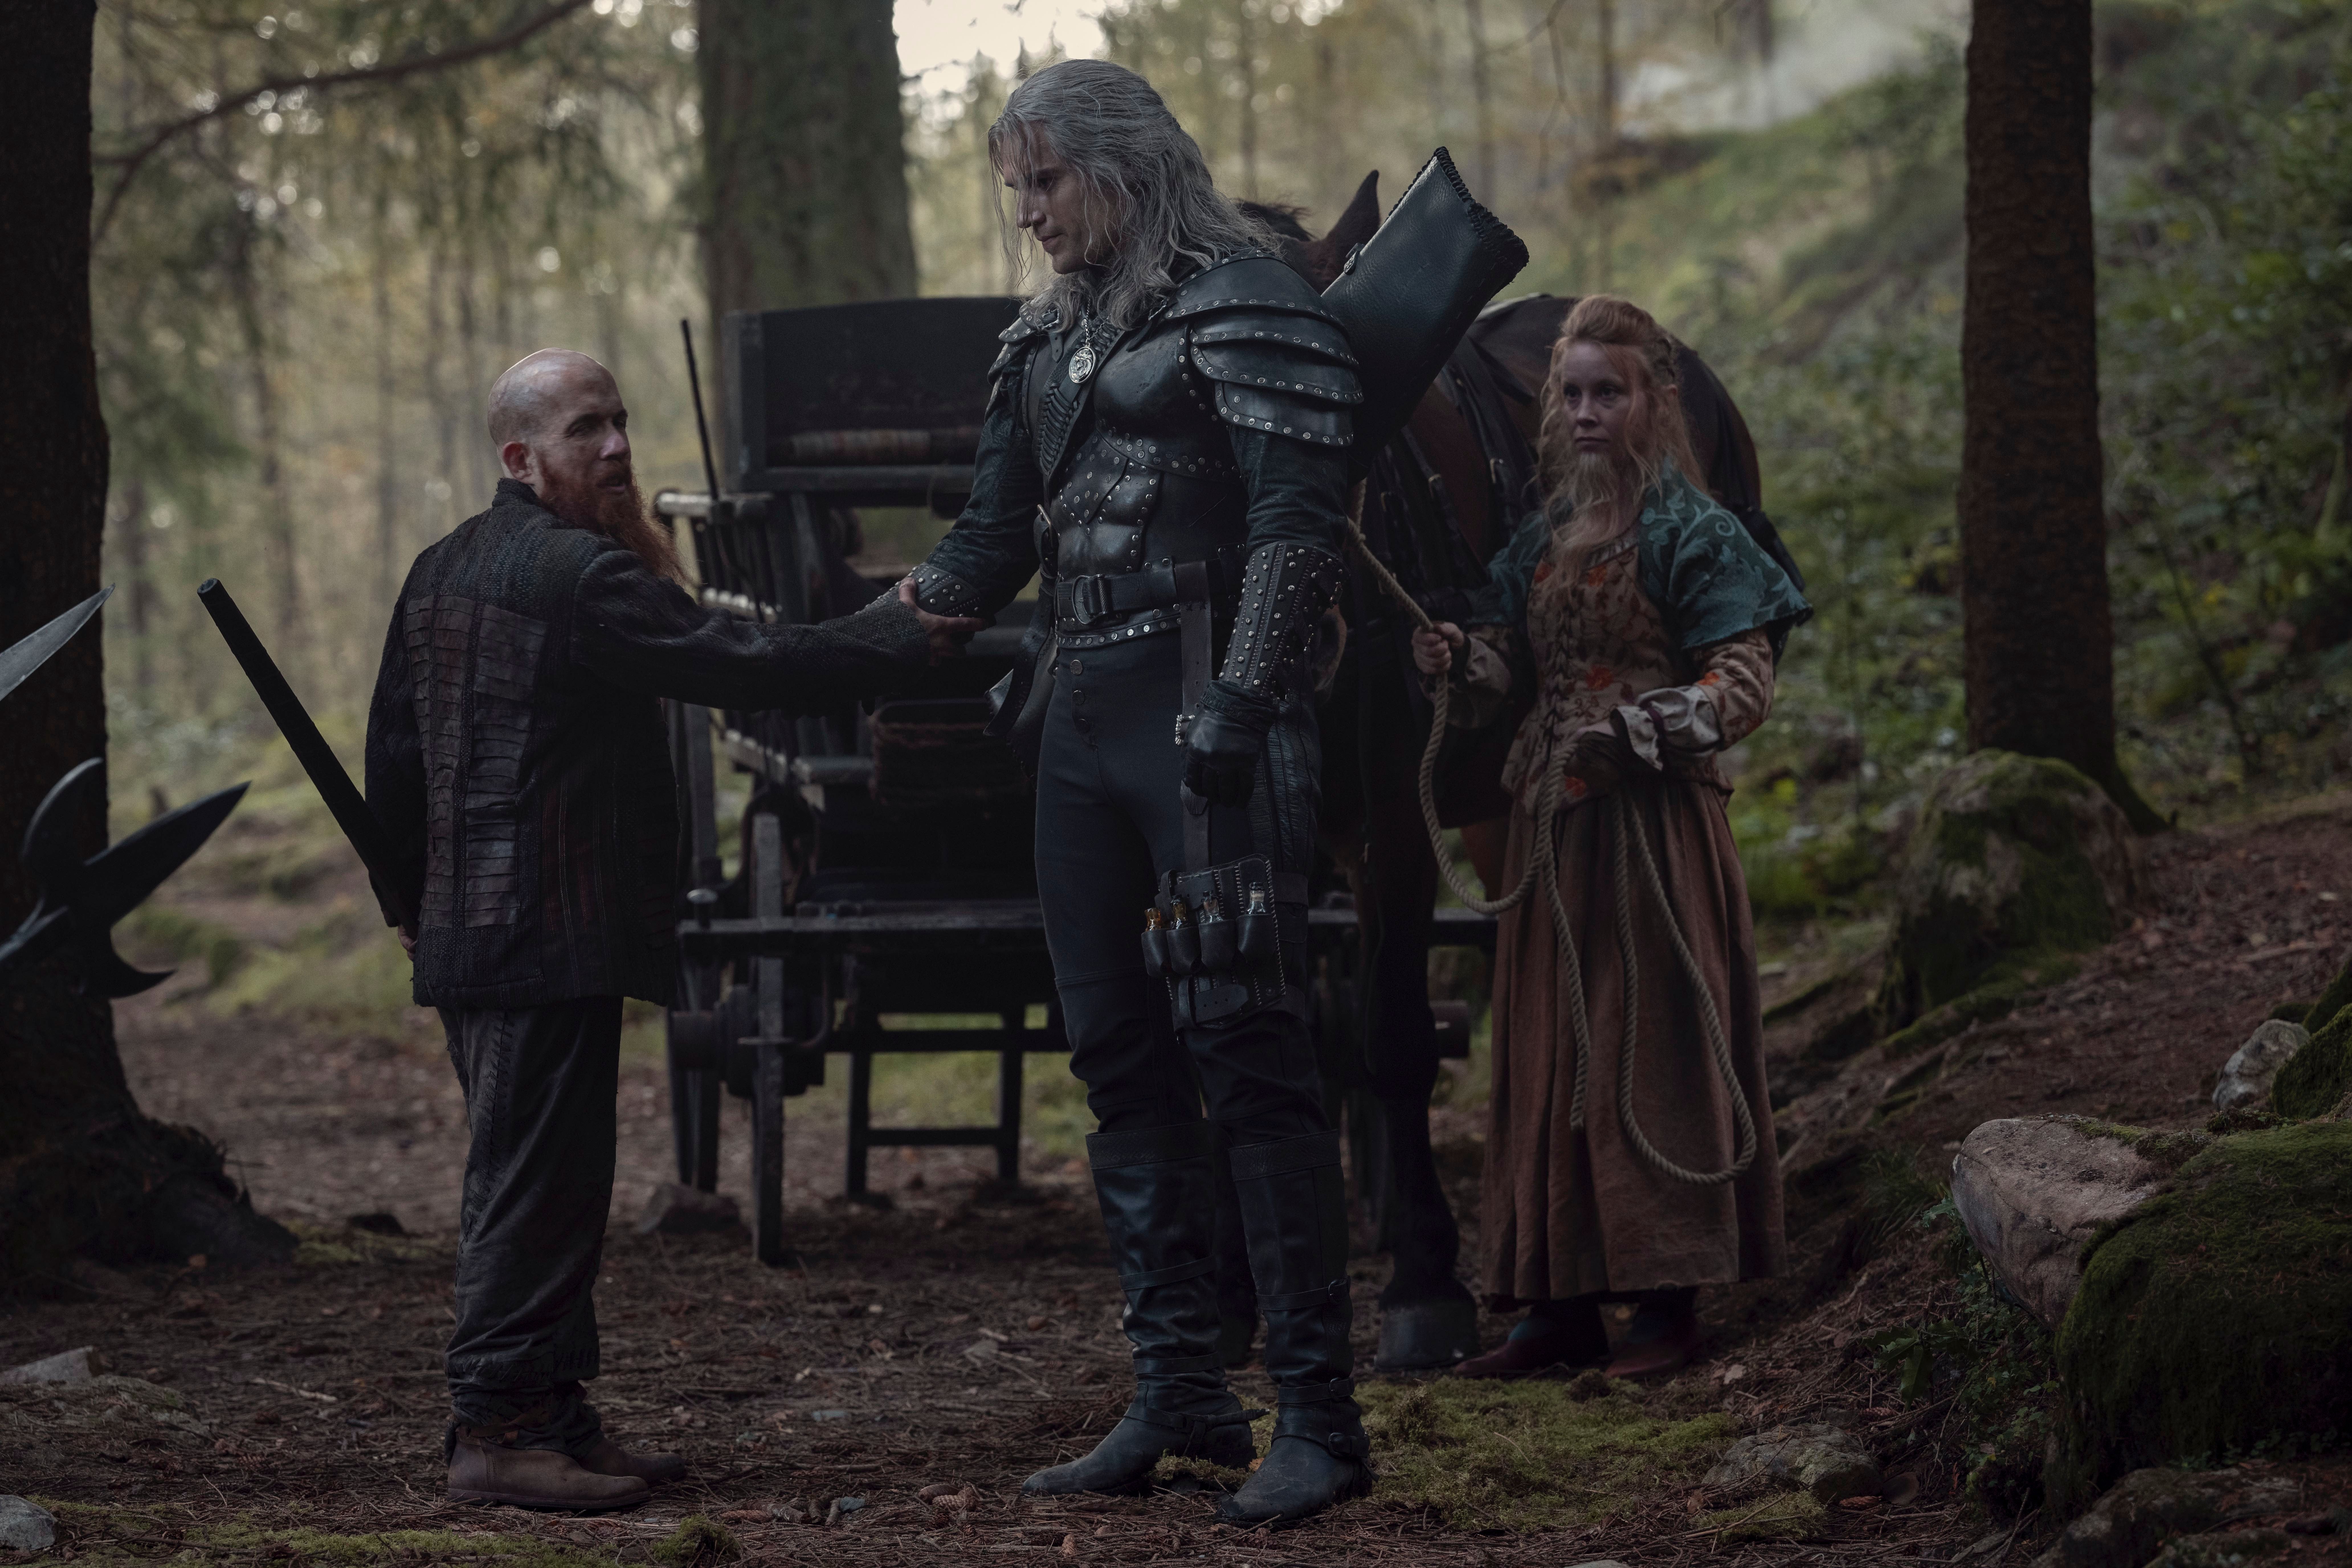 What Happened in The Witcher' Season 2? Let's Recap - Netflix Tudum